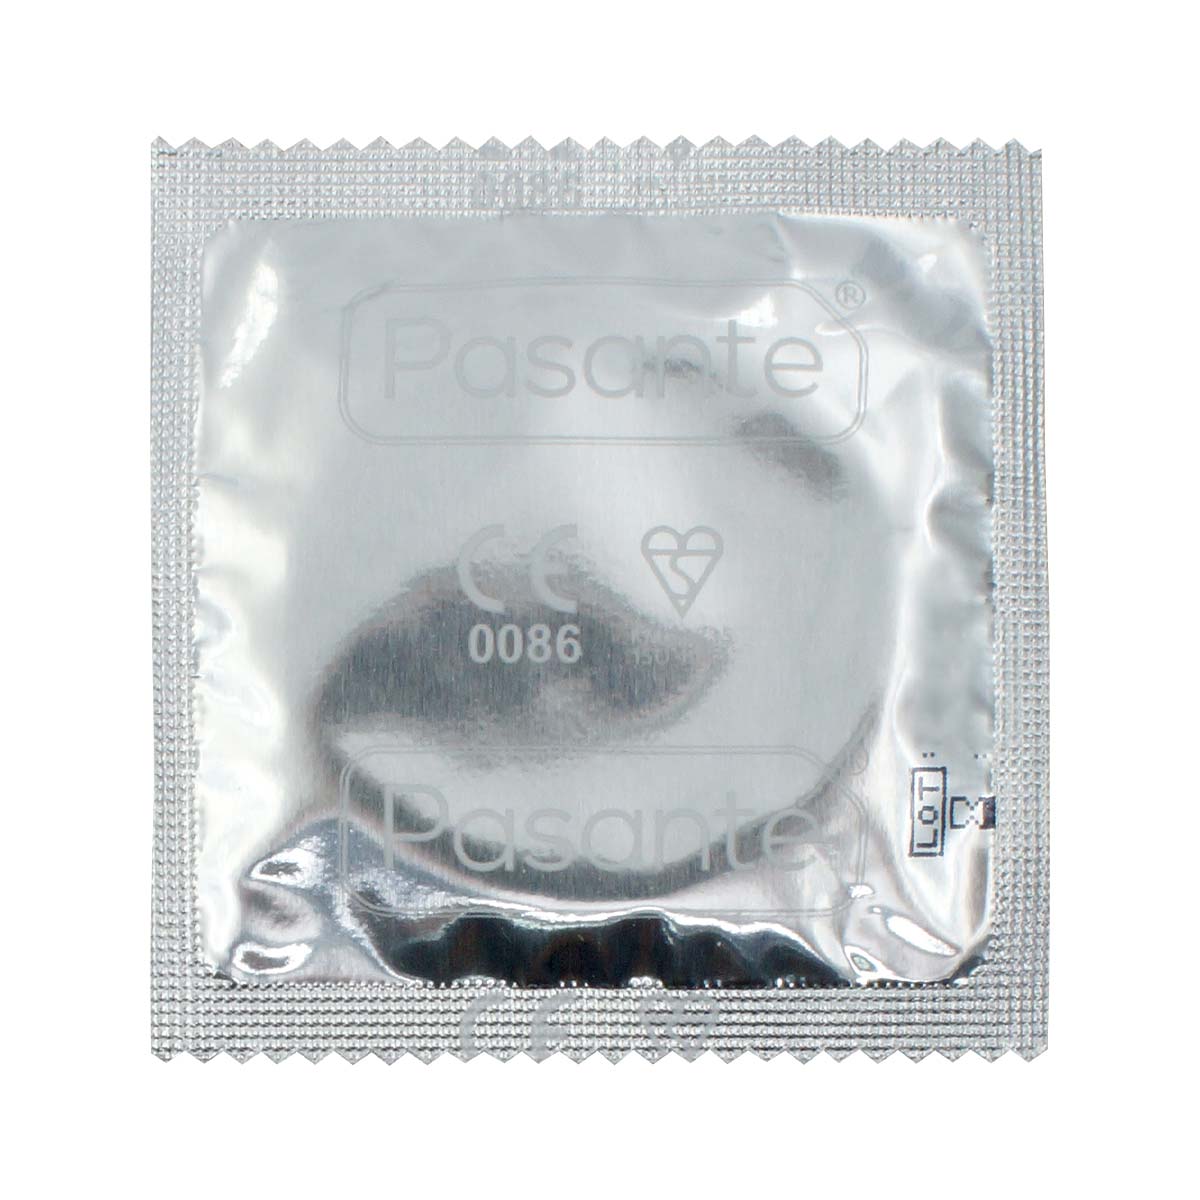 Pasante King Size 1 piece bulk pack Latex Condom-p_3